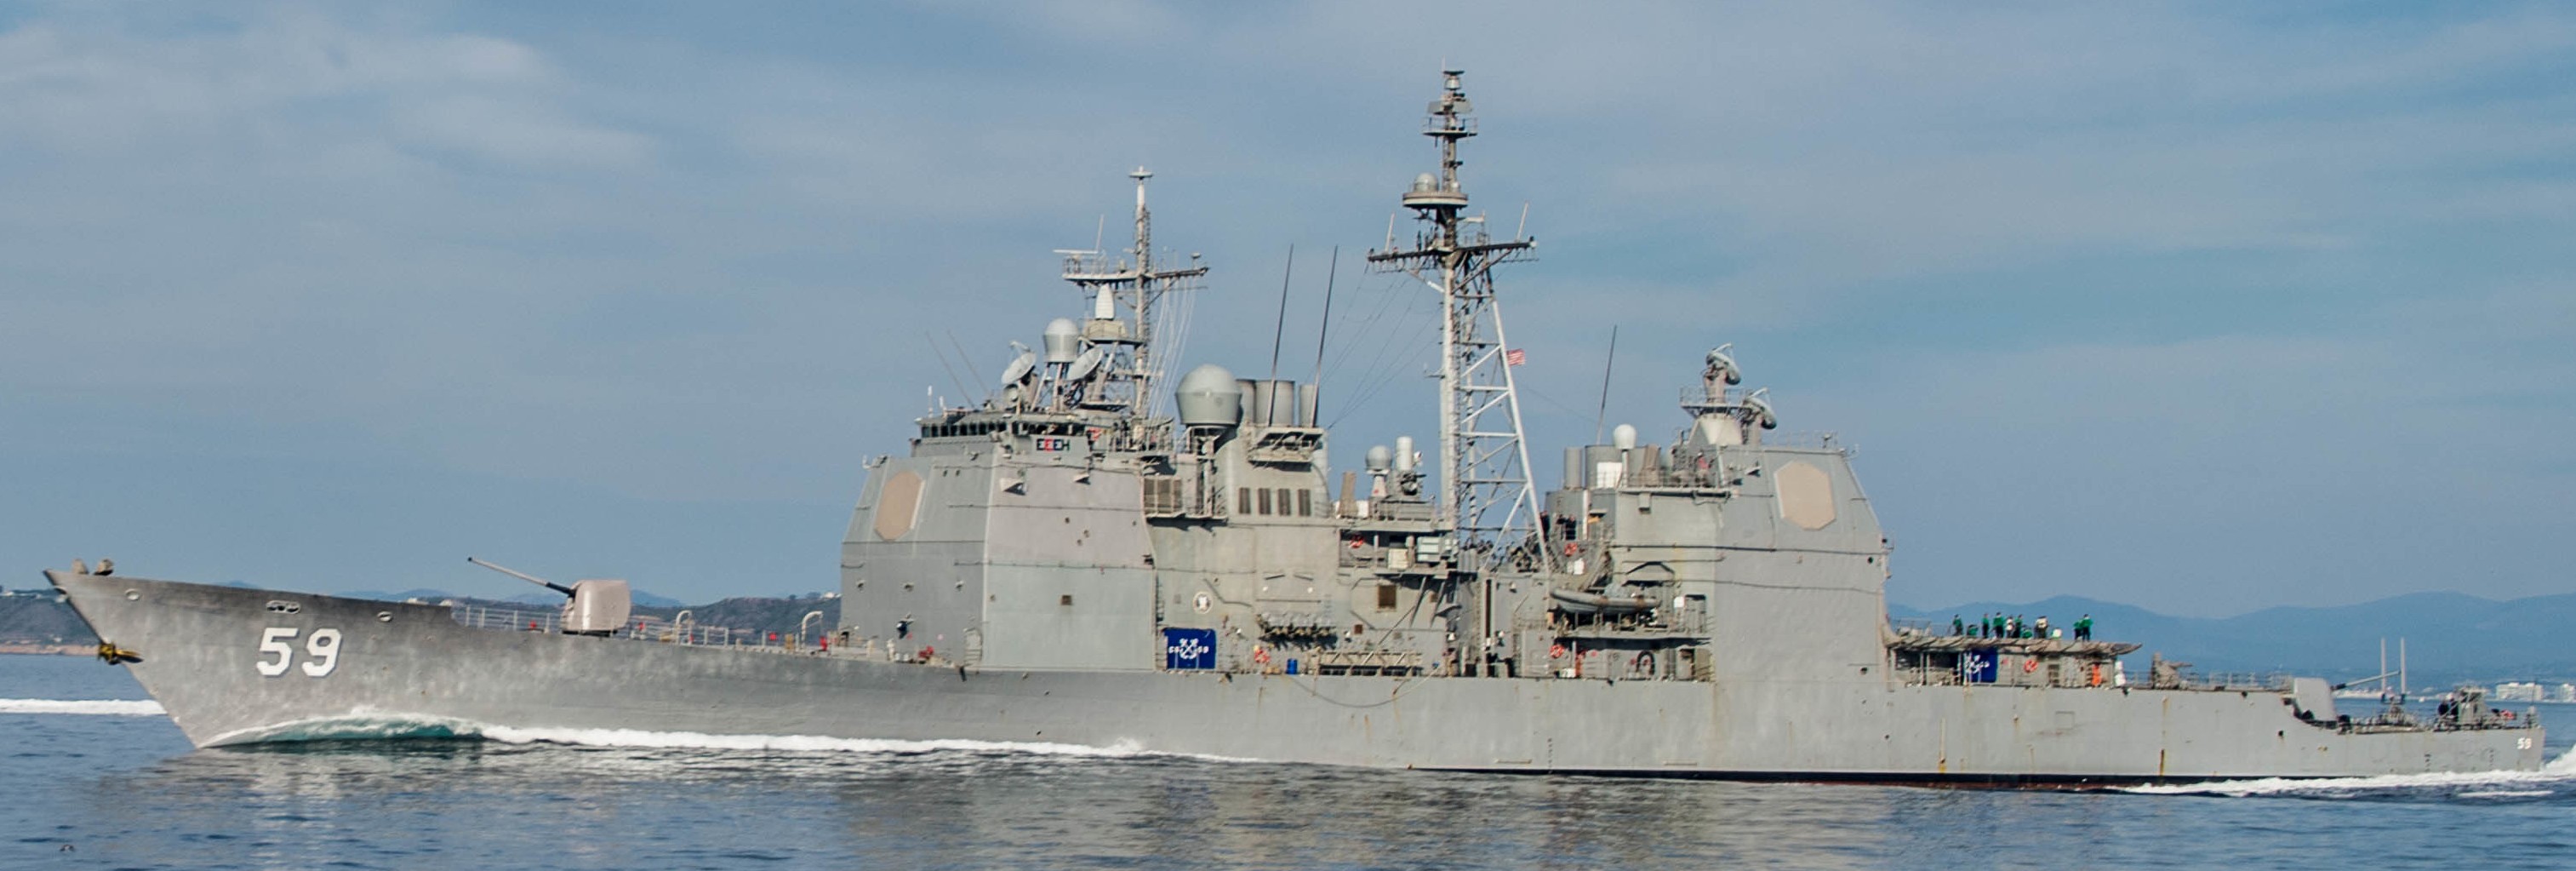 cg-59 uss princeton ticonderoga class guided missile cruiser aegis us navy 89